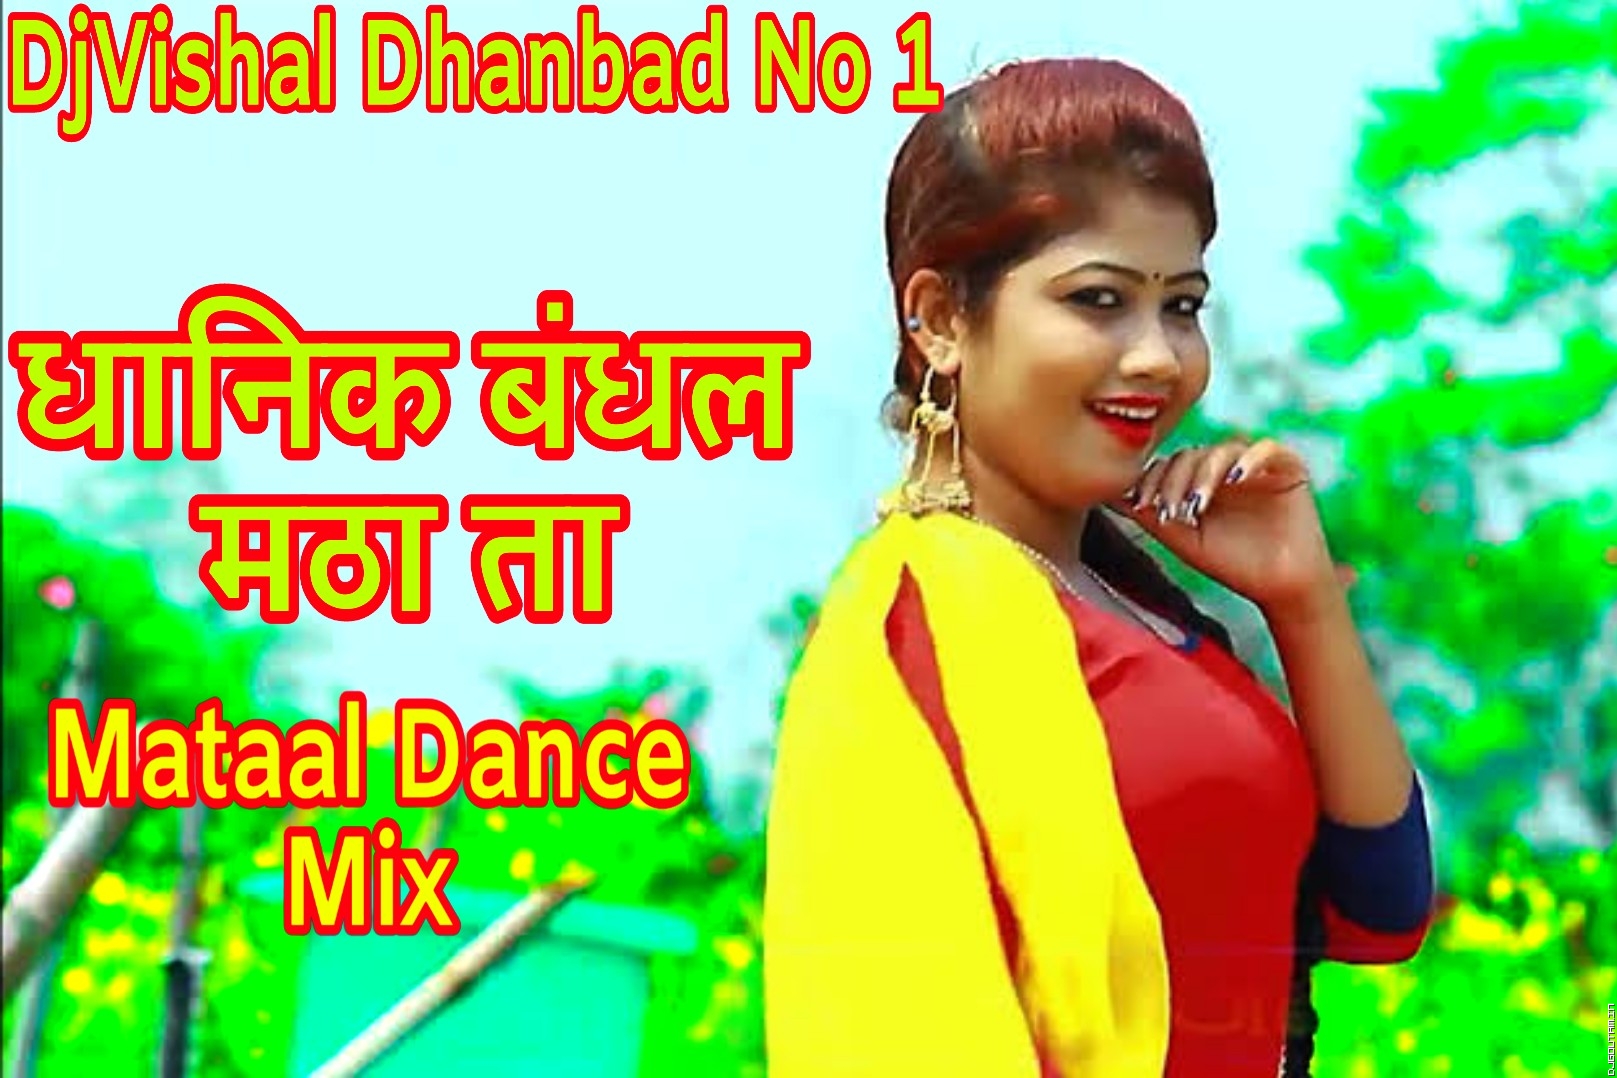 Dhanik_Bandhal_Matha_ta_Singer_Arjun_Das_2020New_Khortha Song [Mataal Dance Mix] By_Dj Vishal Dhanbad.mp3